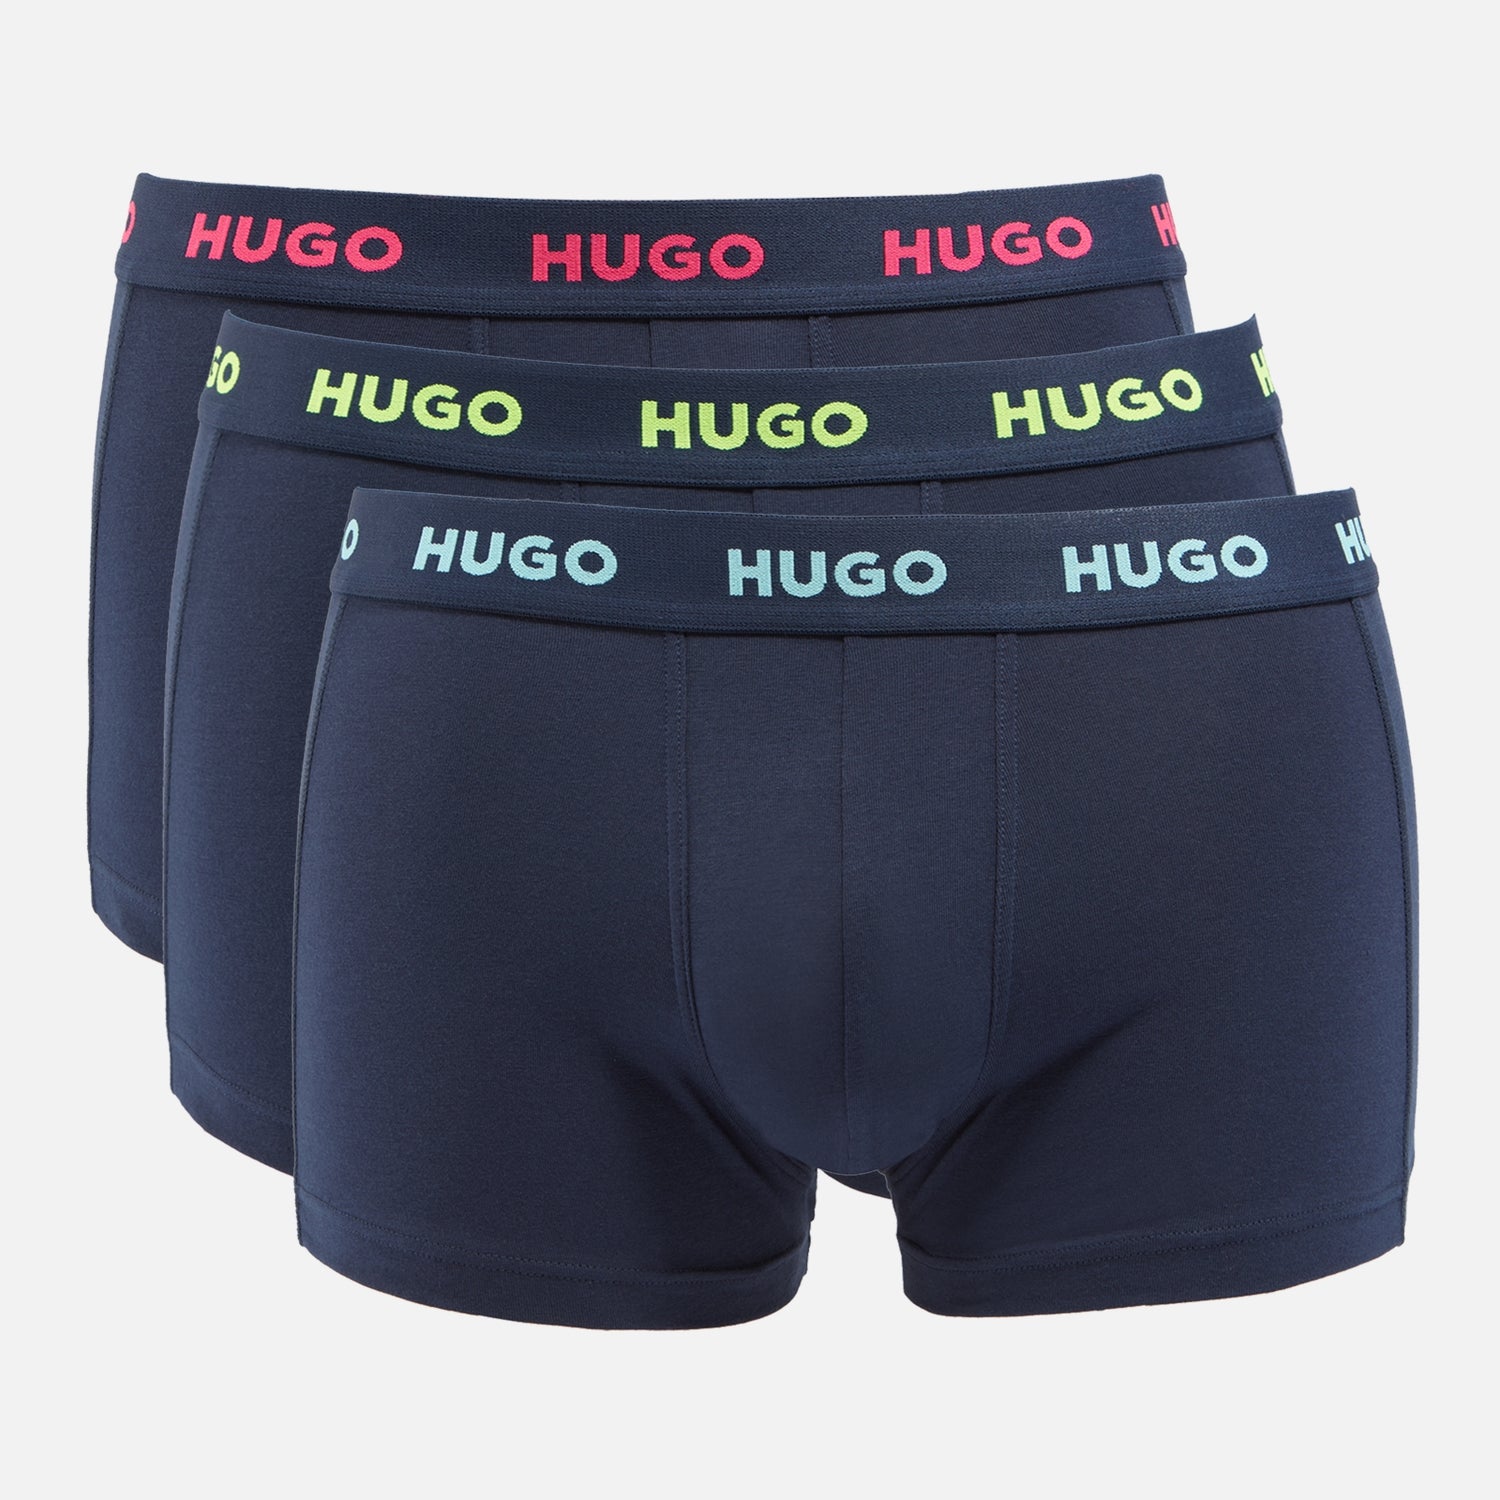 HUGO Bodywear Cotton-Blend Jersey 3-Pack Boxer Trunks - S